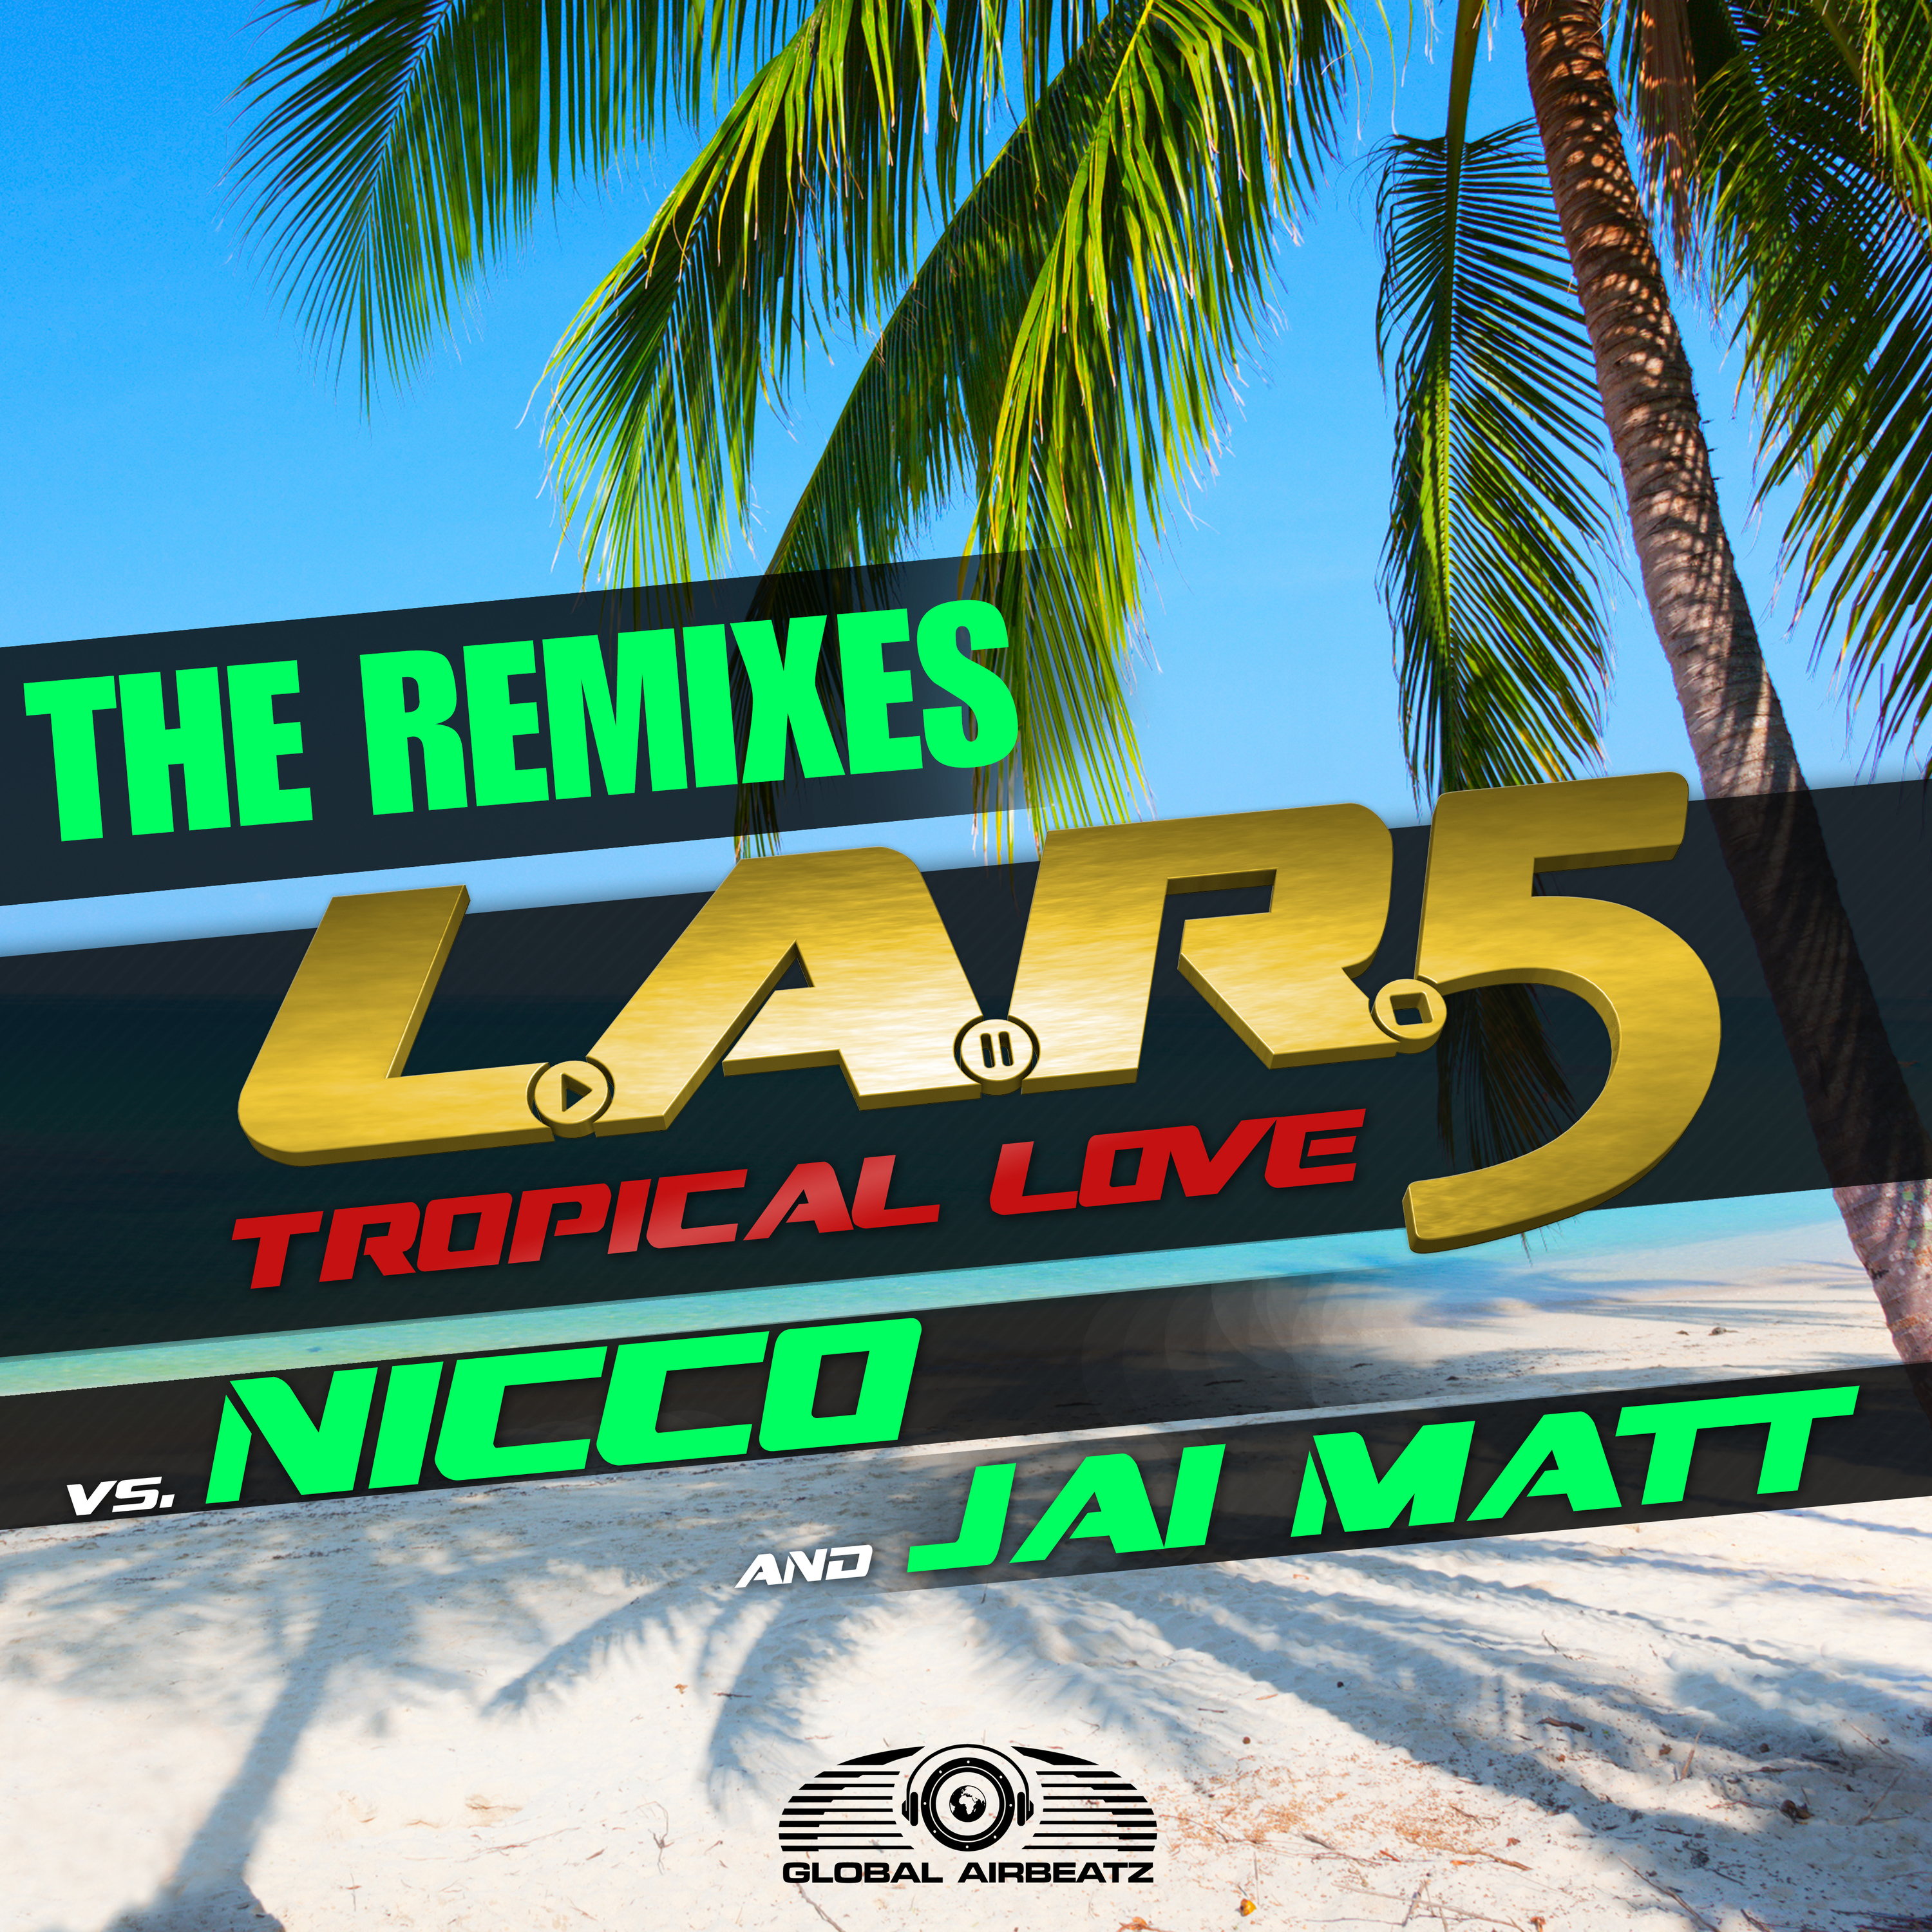 Tropical Love (Phillerz Remix)